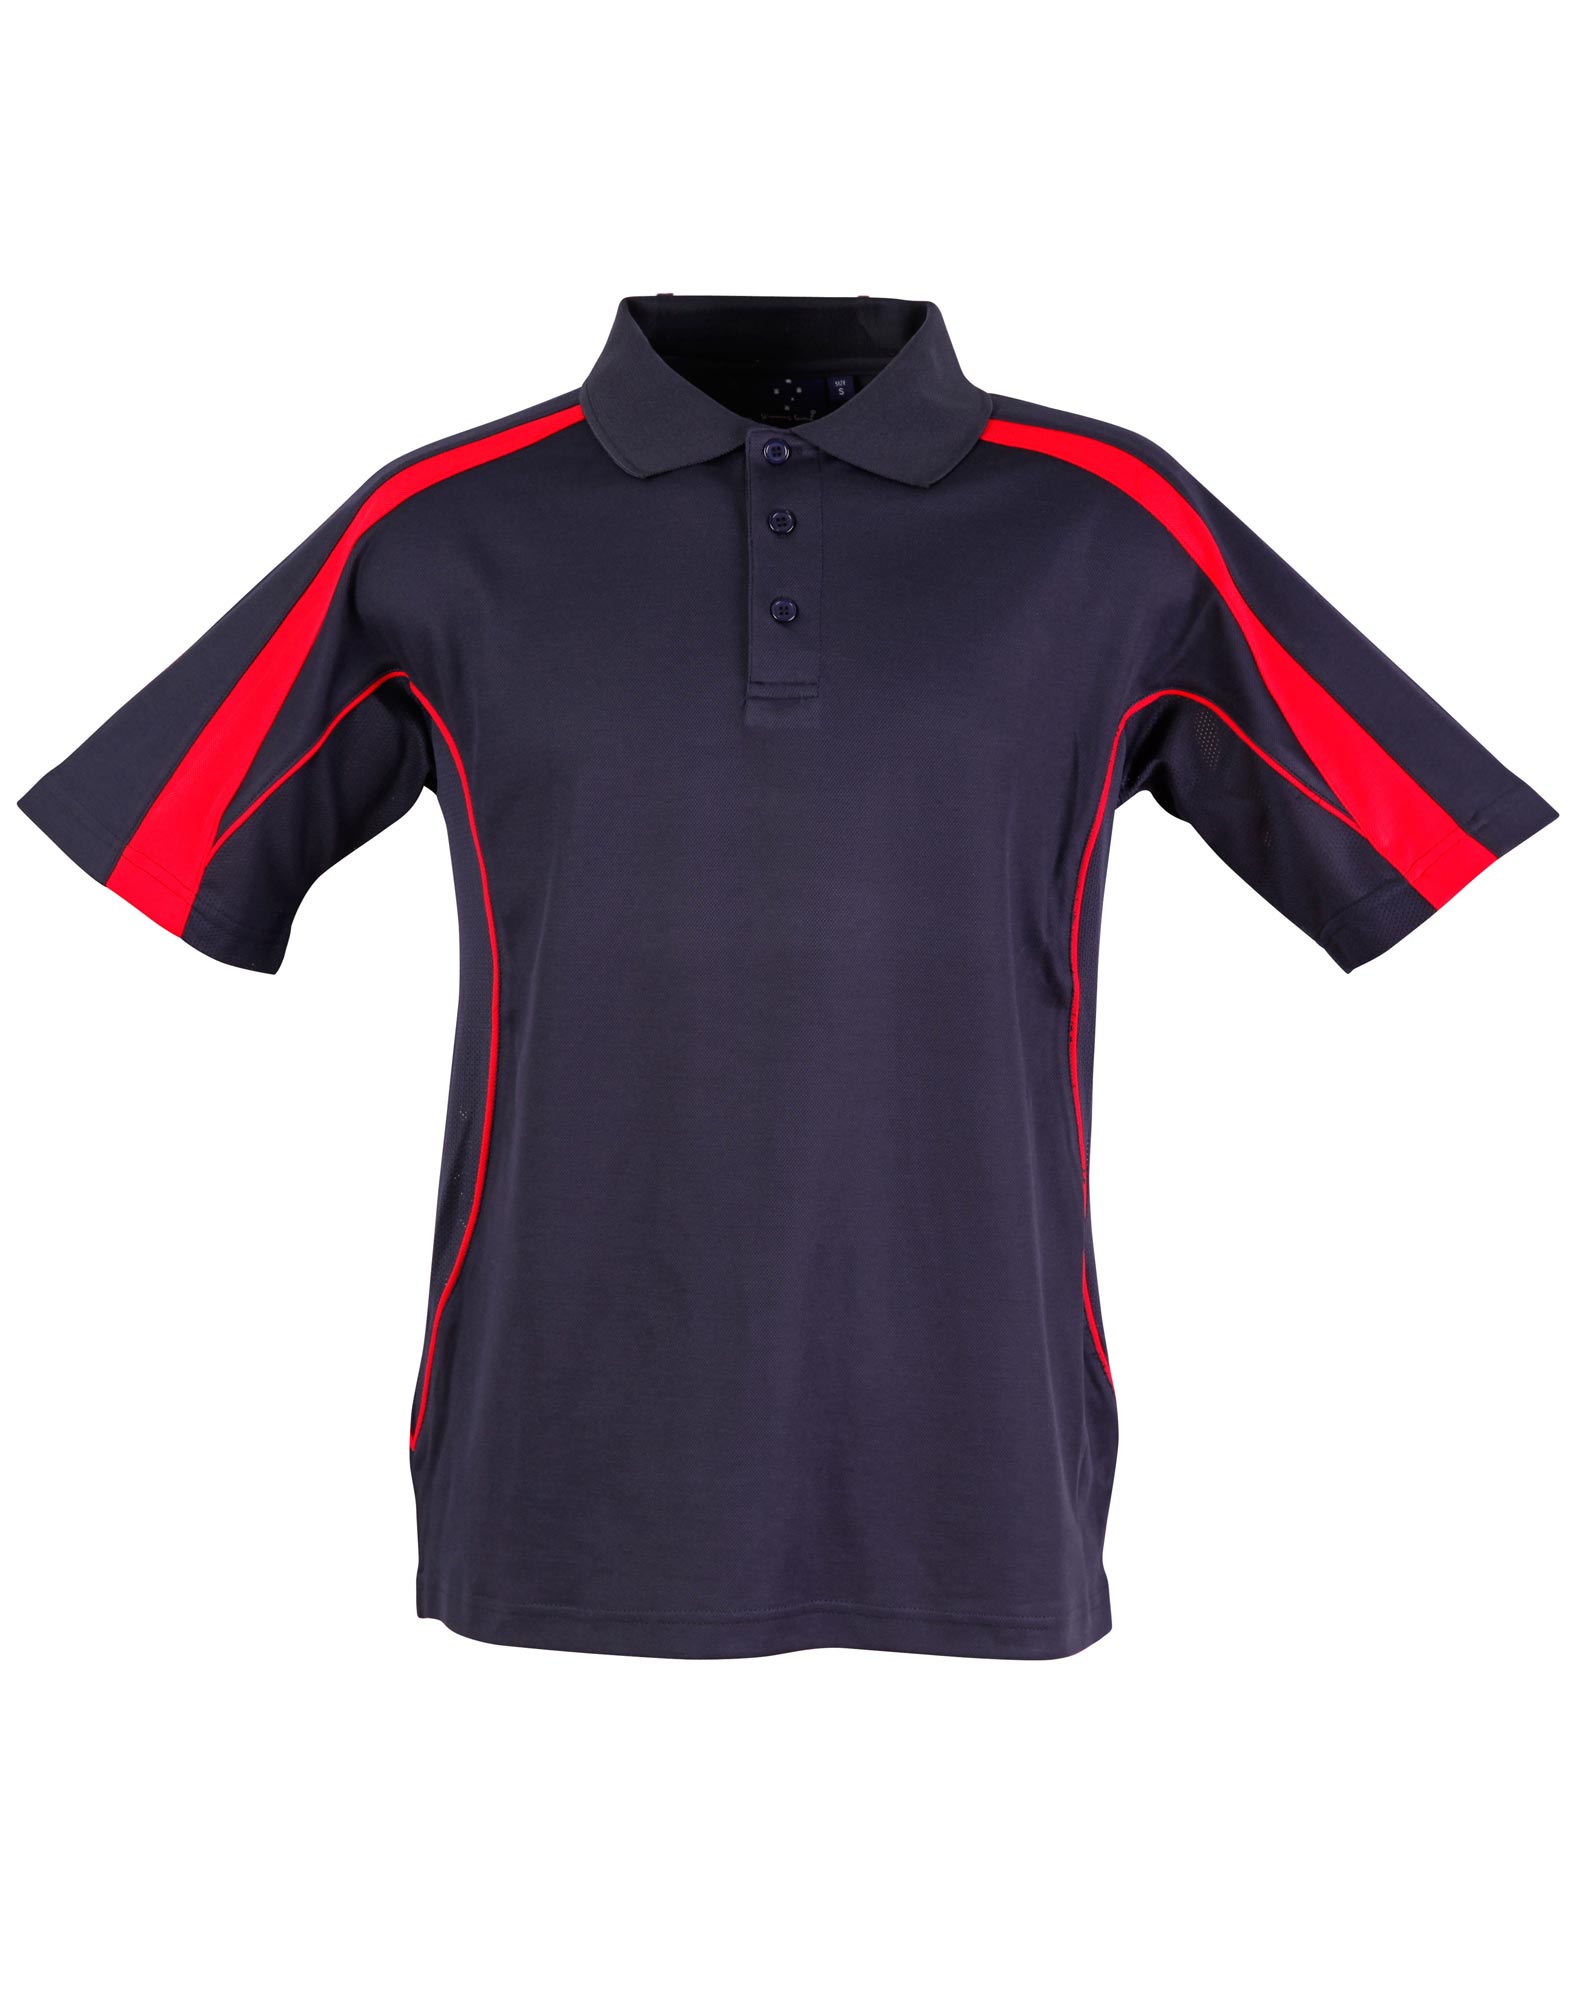 Custom (Navy Aqua Blue) Legend Polo Shirts for Men Online Perth Australia